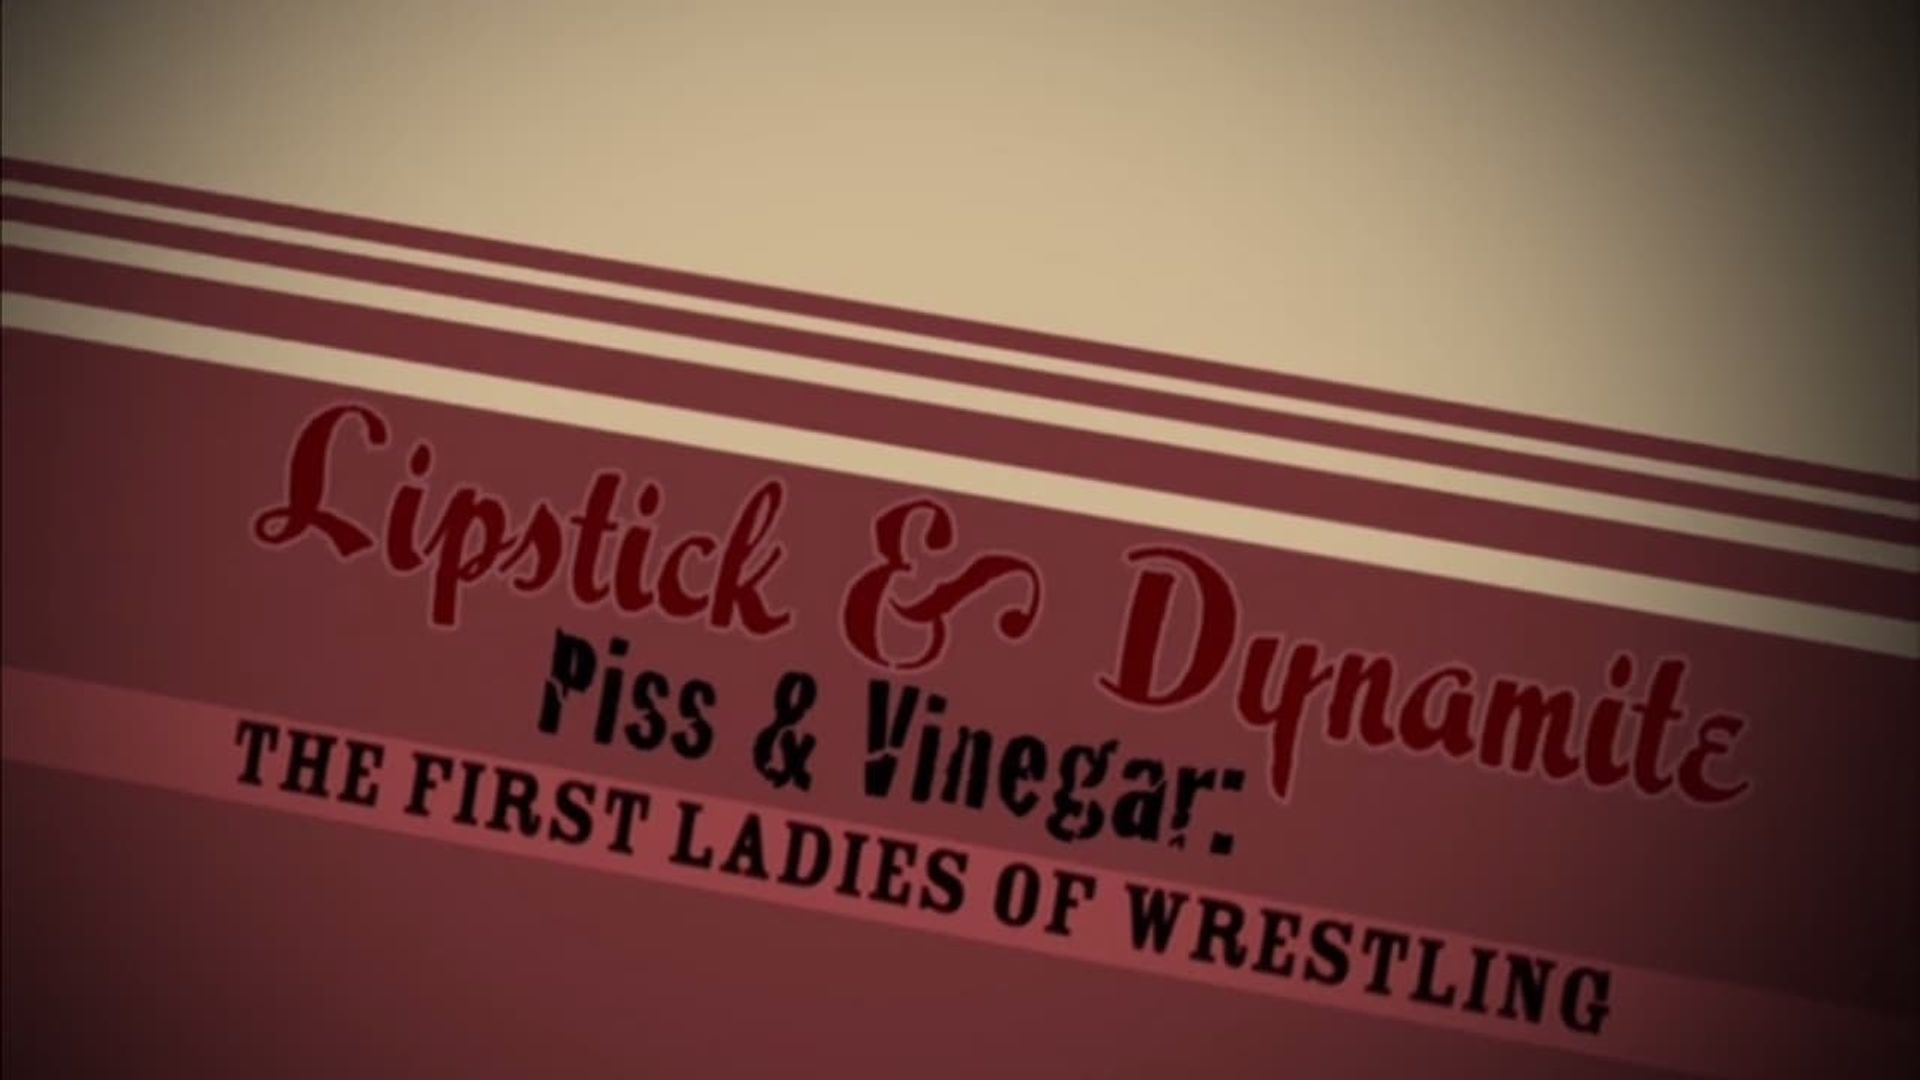 Lipstick & Dynamite, Piss & Vinegar: The First Ladies of Wrestling background